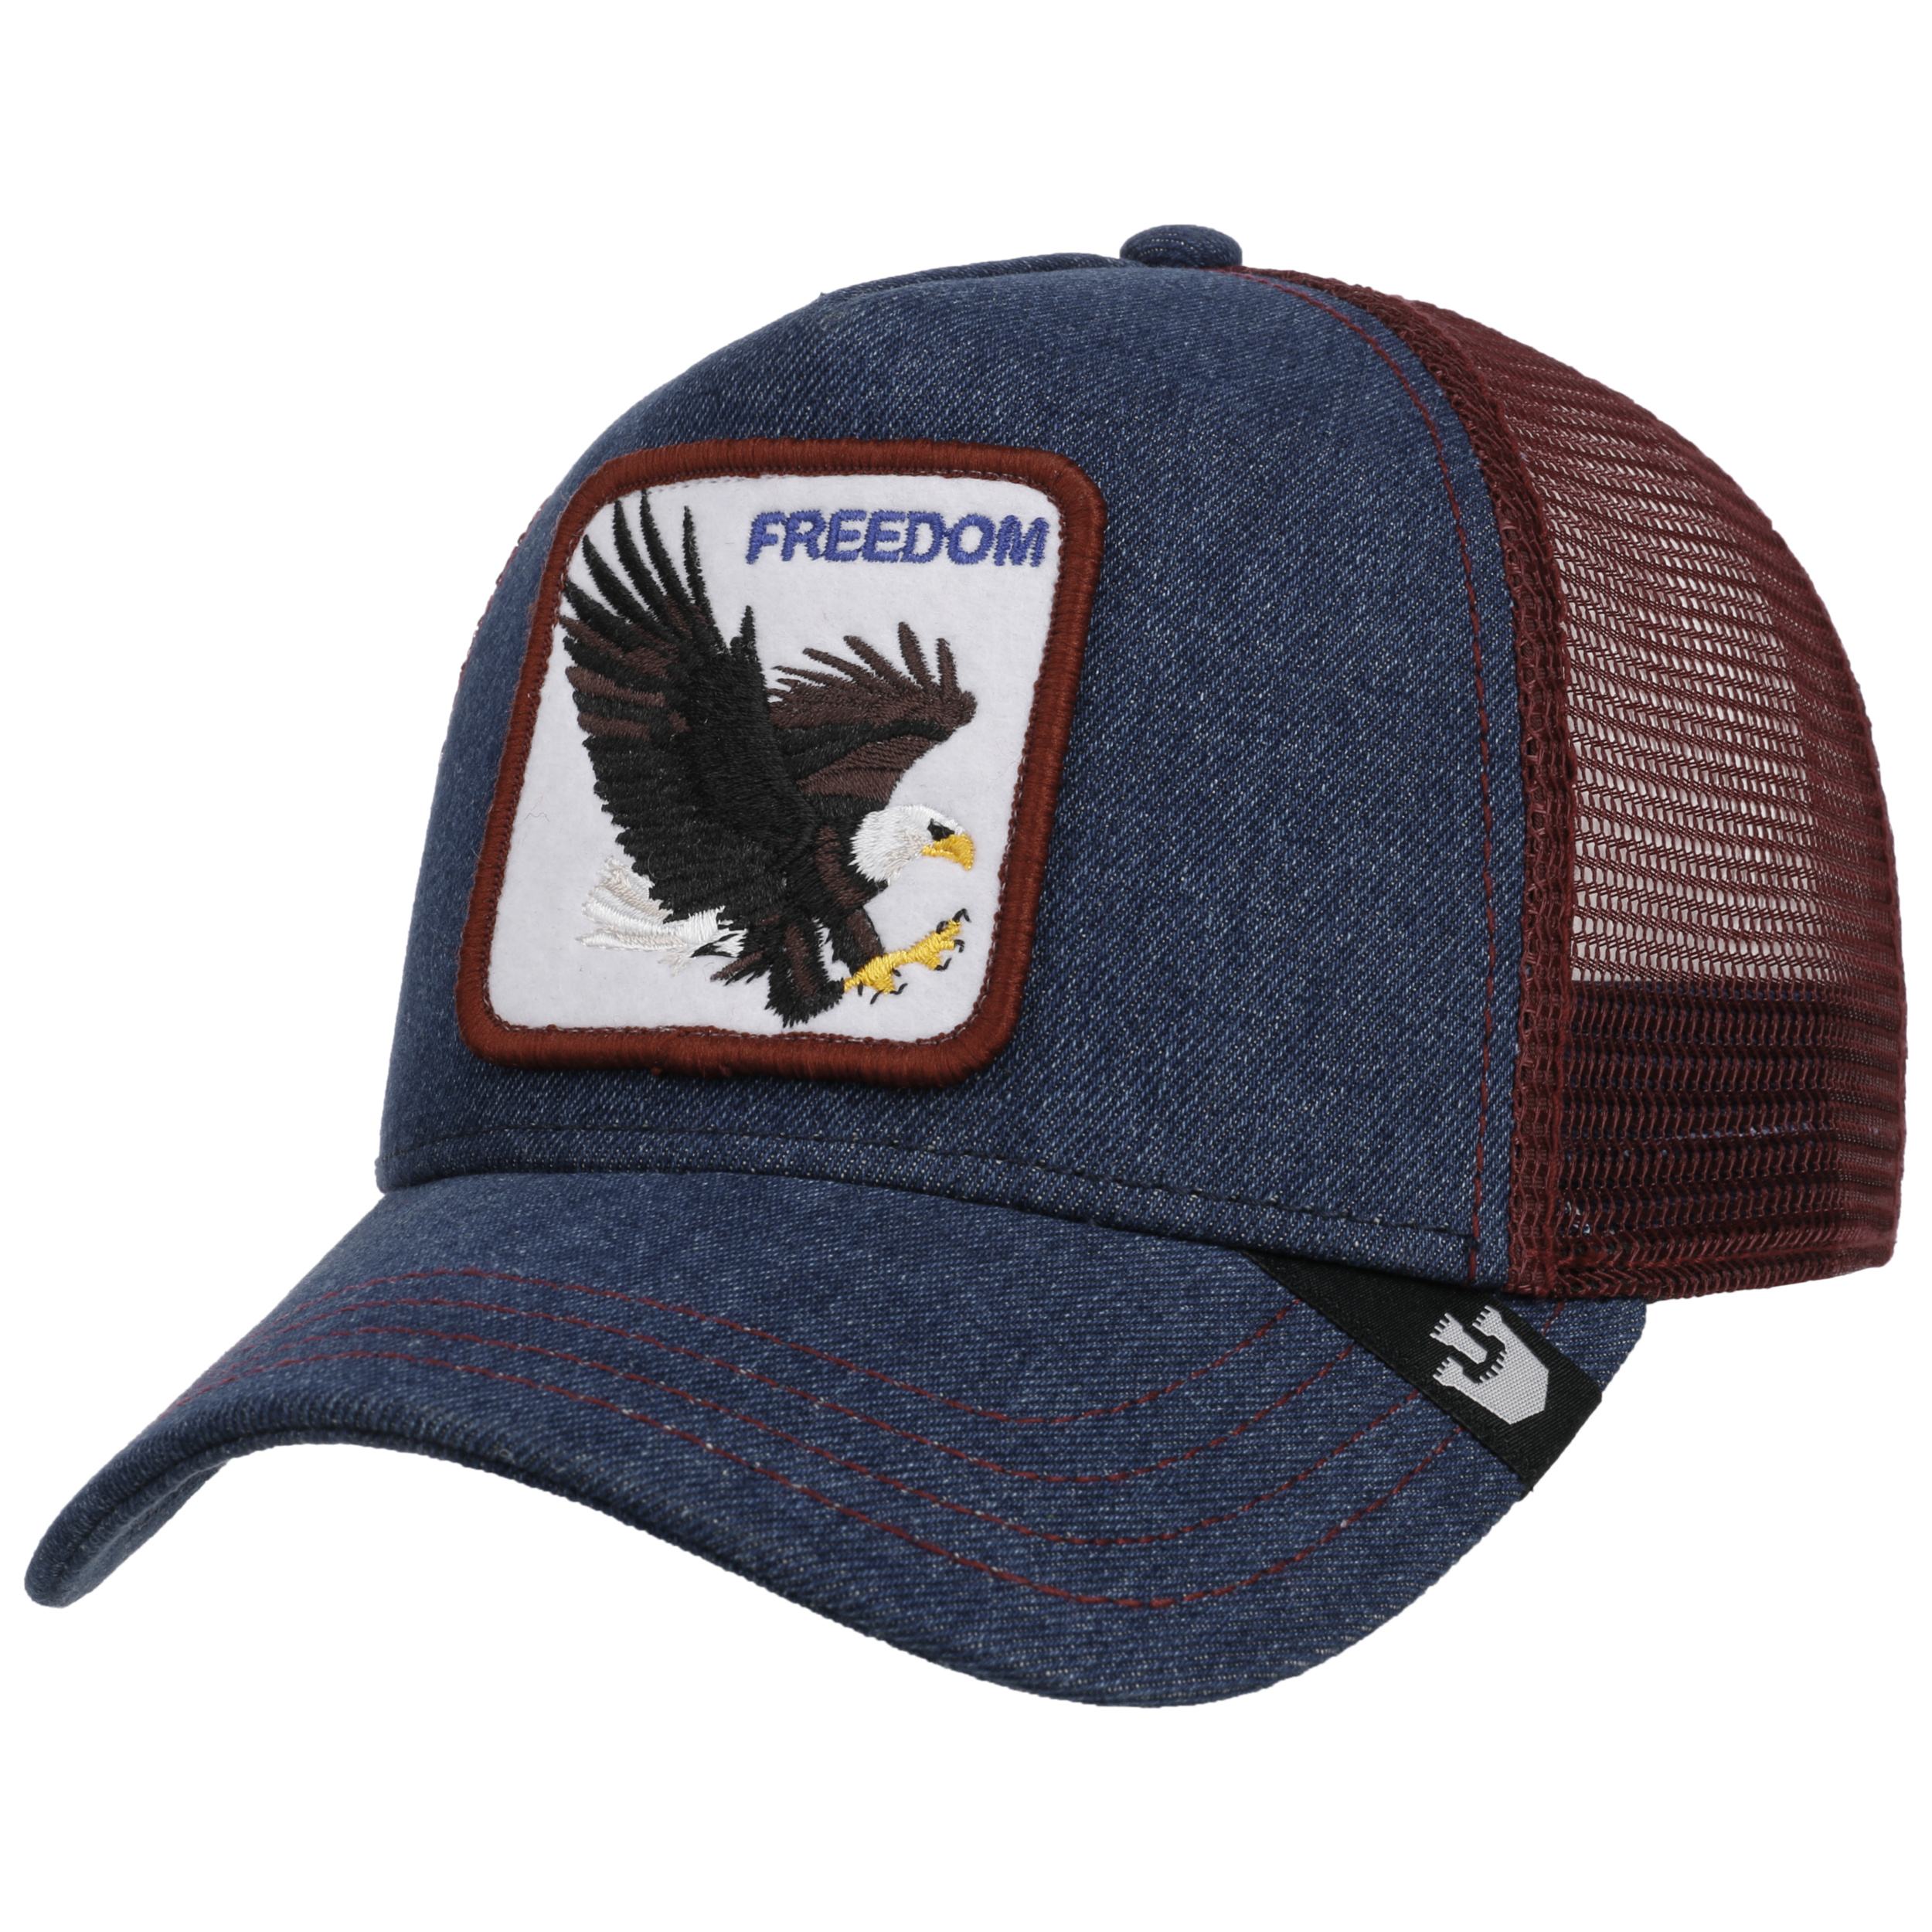 The Freedom Eagle Trucker Cap by Goorin Bros.